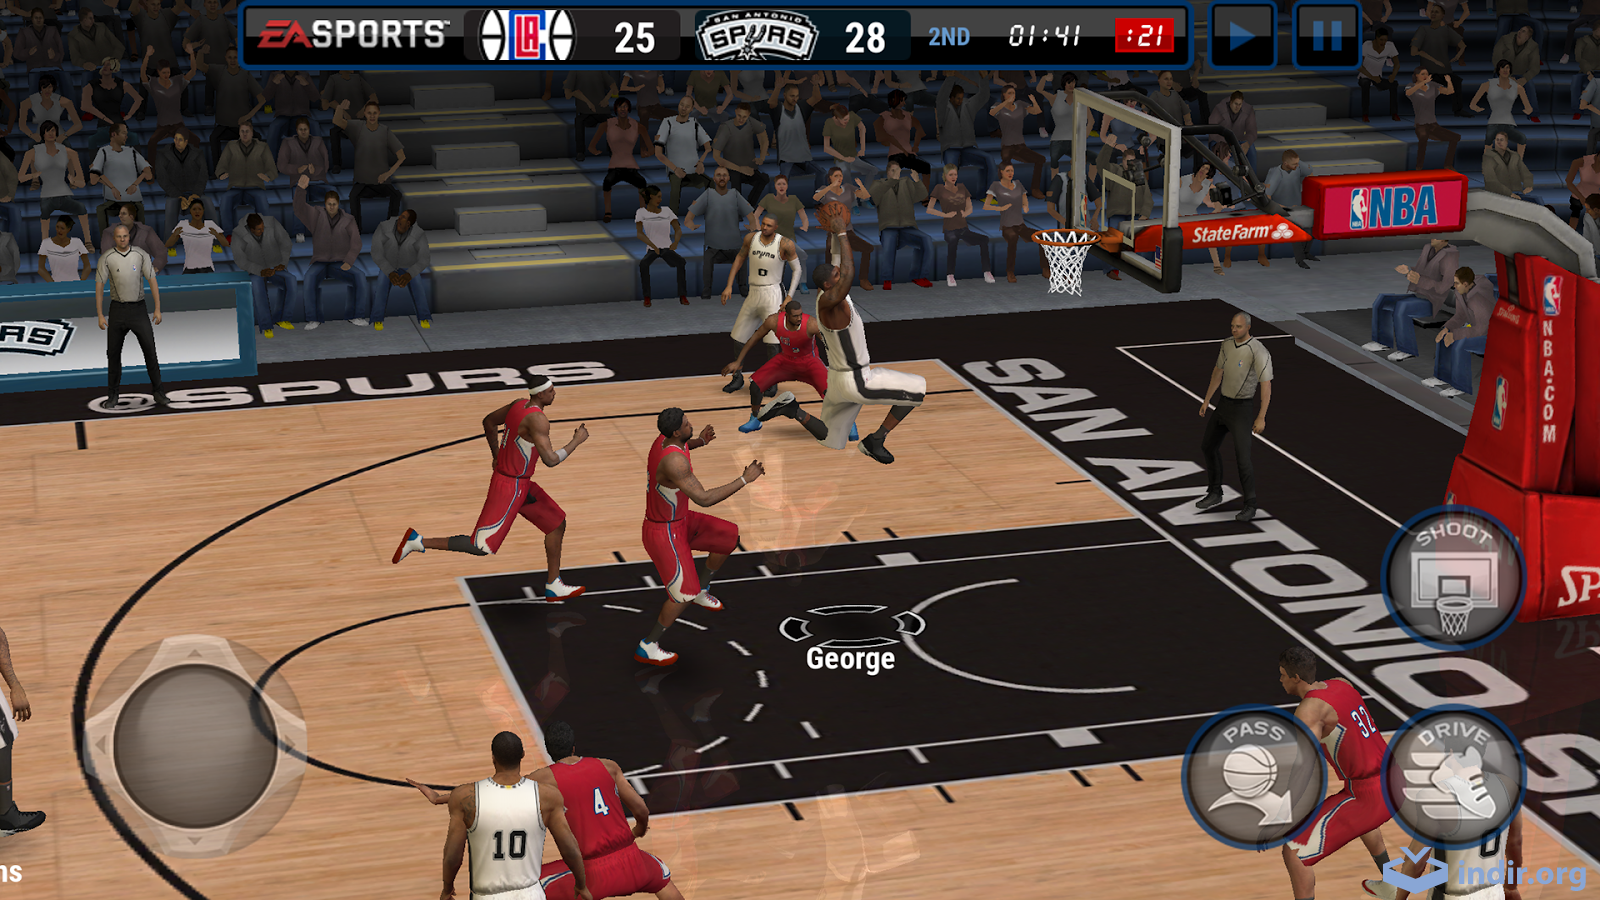 NBA LIVE Mobile indir (Android) Android için NBA Basketbol Oyunu